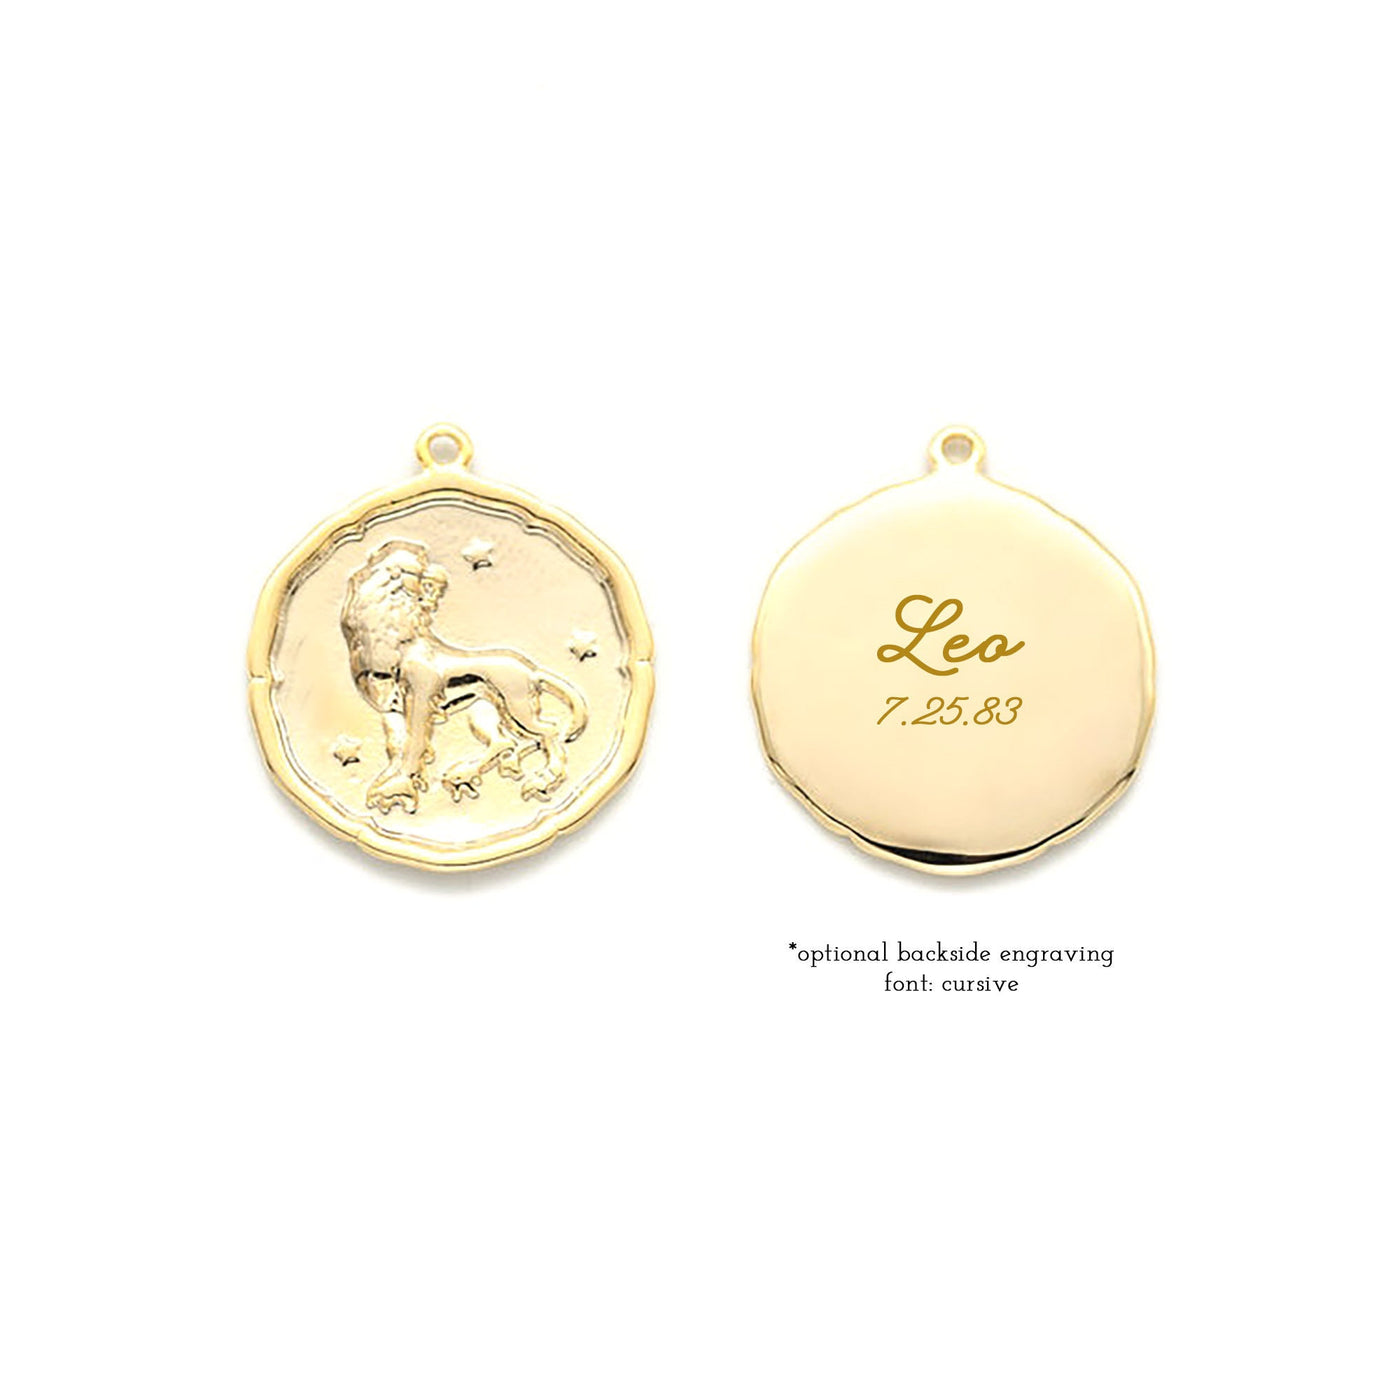 Leo Zodiac Wax Seal Pendant Necklace